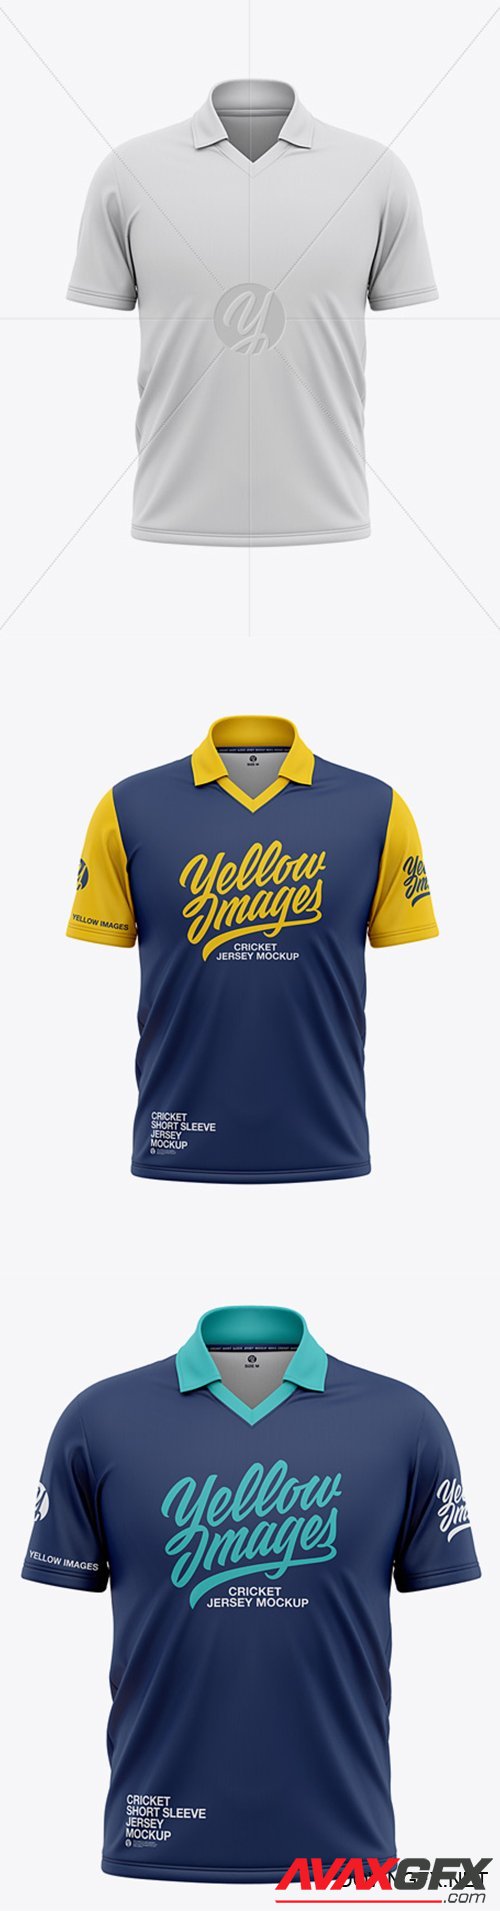 Mens Regular Short Sleeve Cricket Jersey / Polo V-Neck Shirt - Front View 40261 TIF